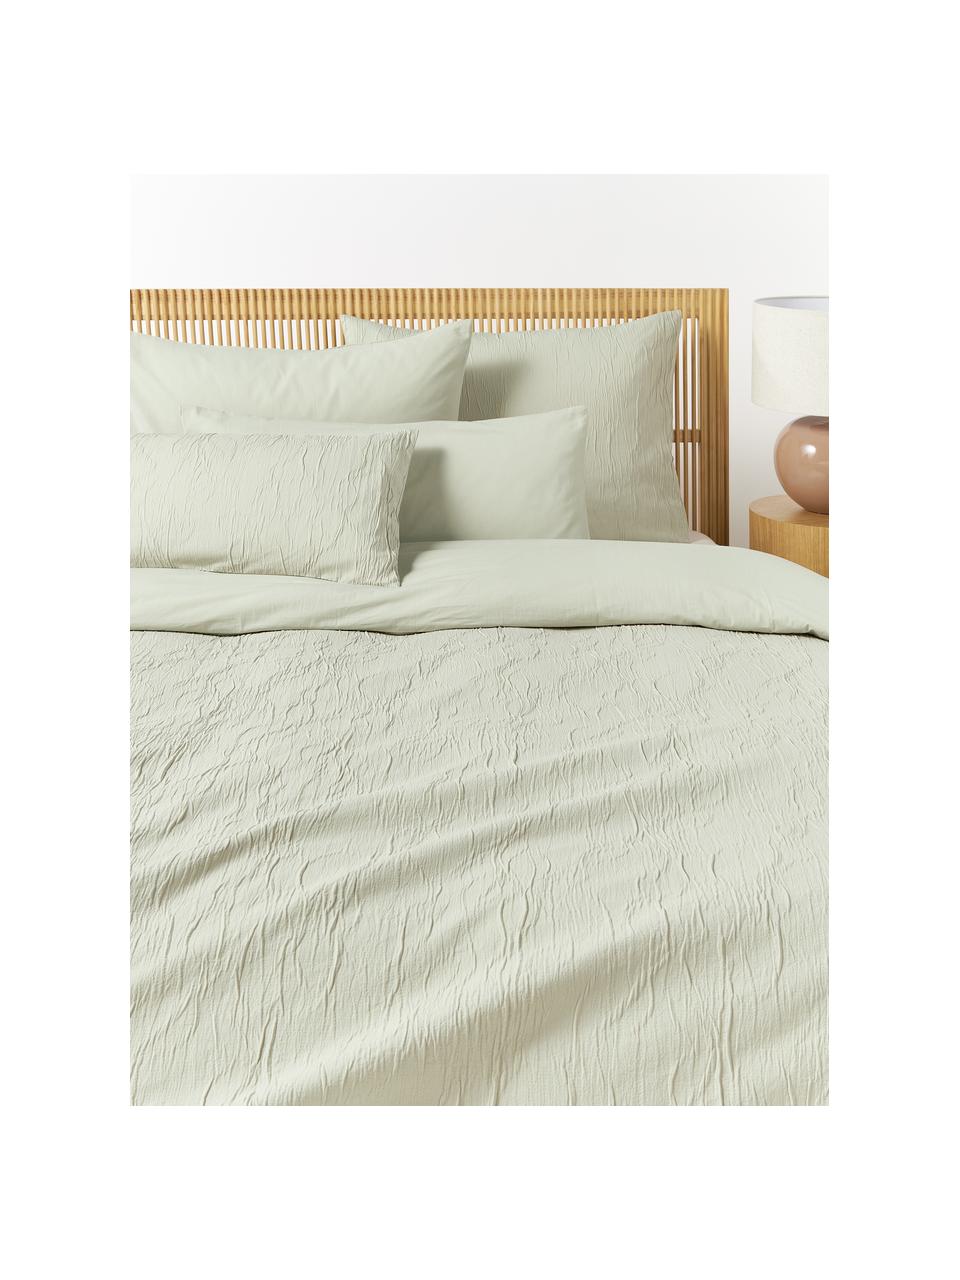 Funda almohada algodón percal. Cama 150-160cm., Dormitorio